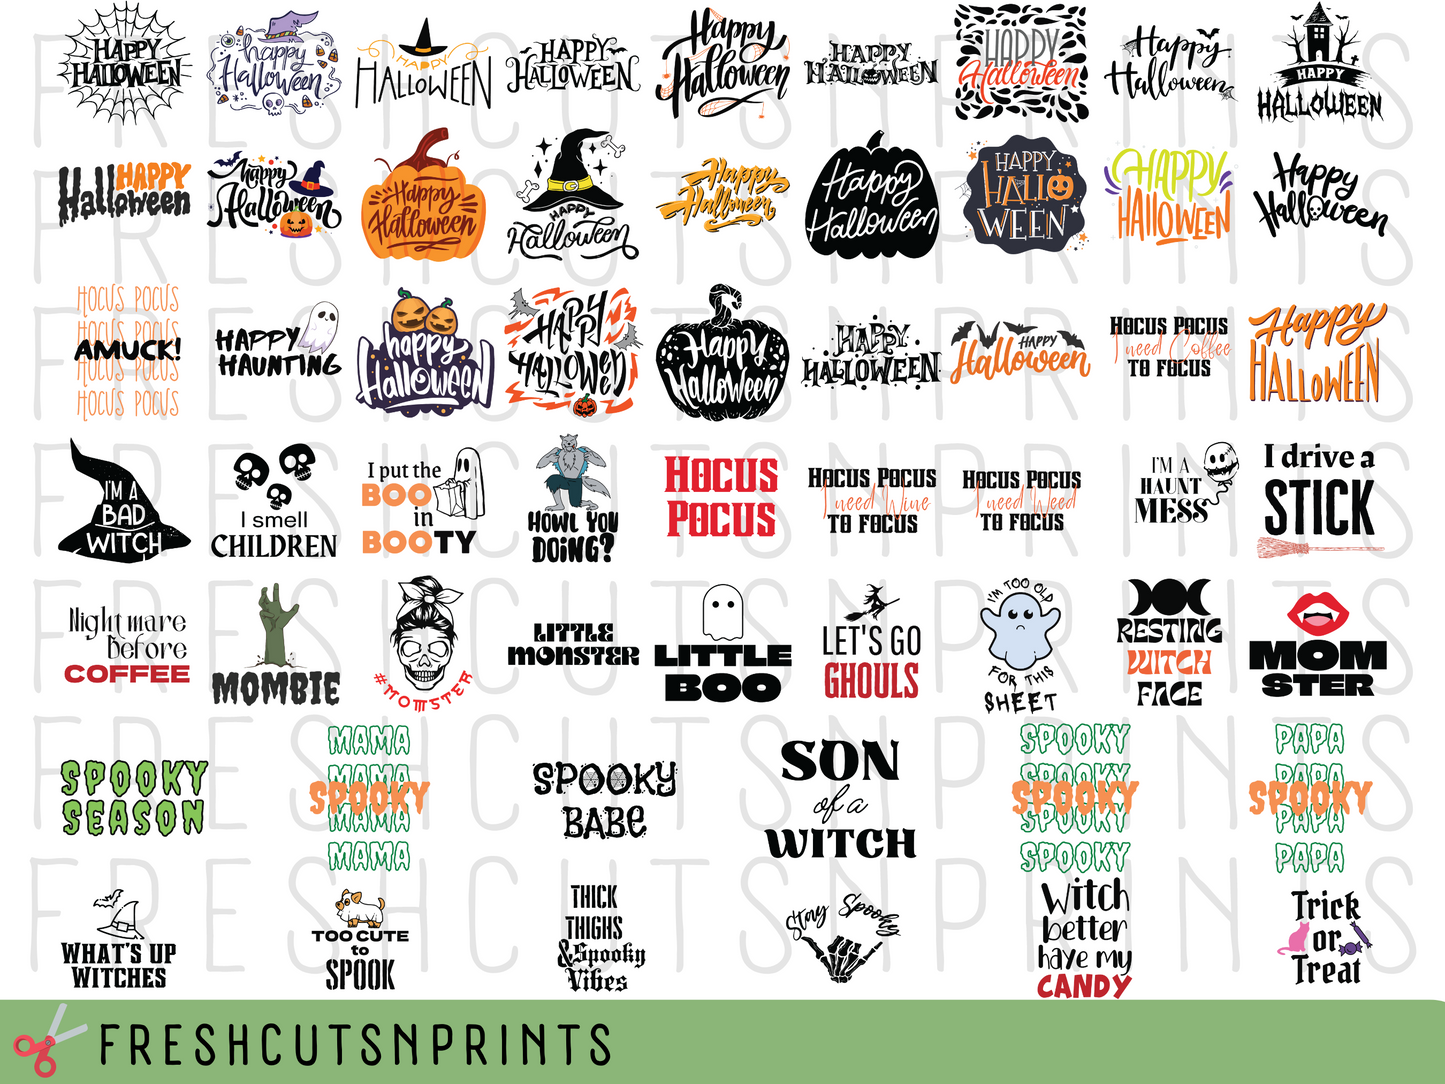 Huge Halloween SVG Bundle, Halloween clipart, Witch svg, Spooky svg, Halloween shirt svg, Happy Halloween, Funny Halloween designs